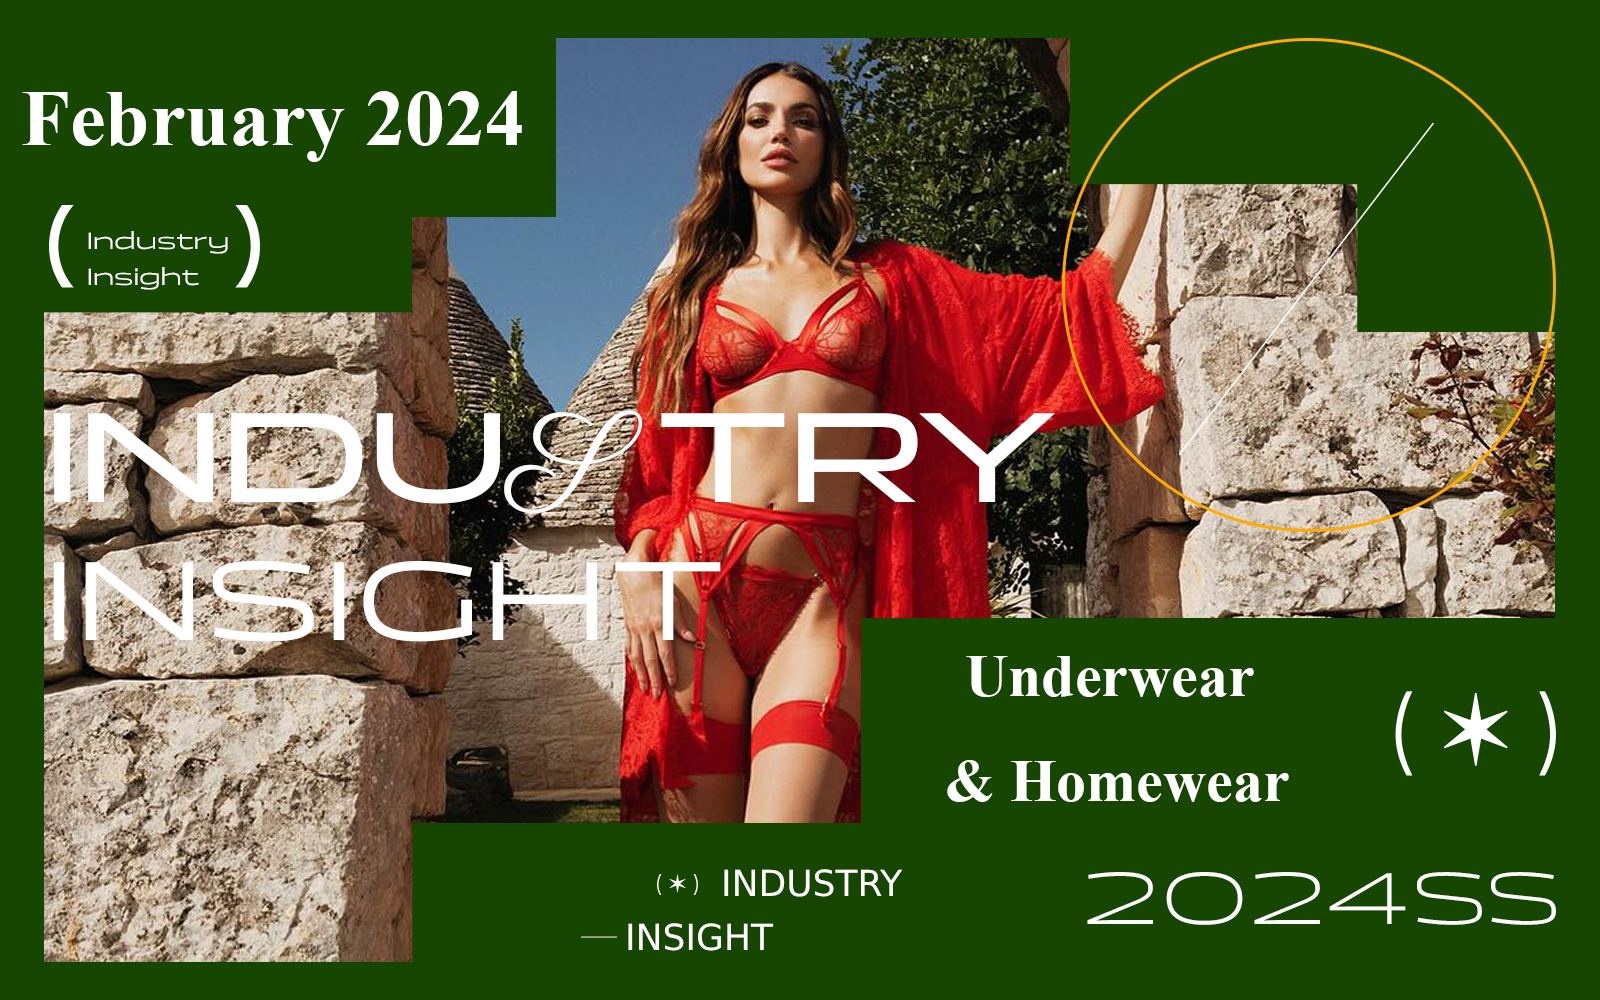 February 2024 -- The Industry Insight of Underwear & Homewear